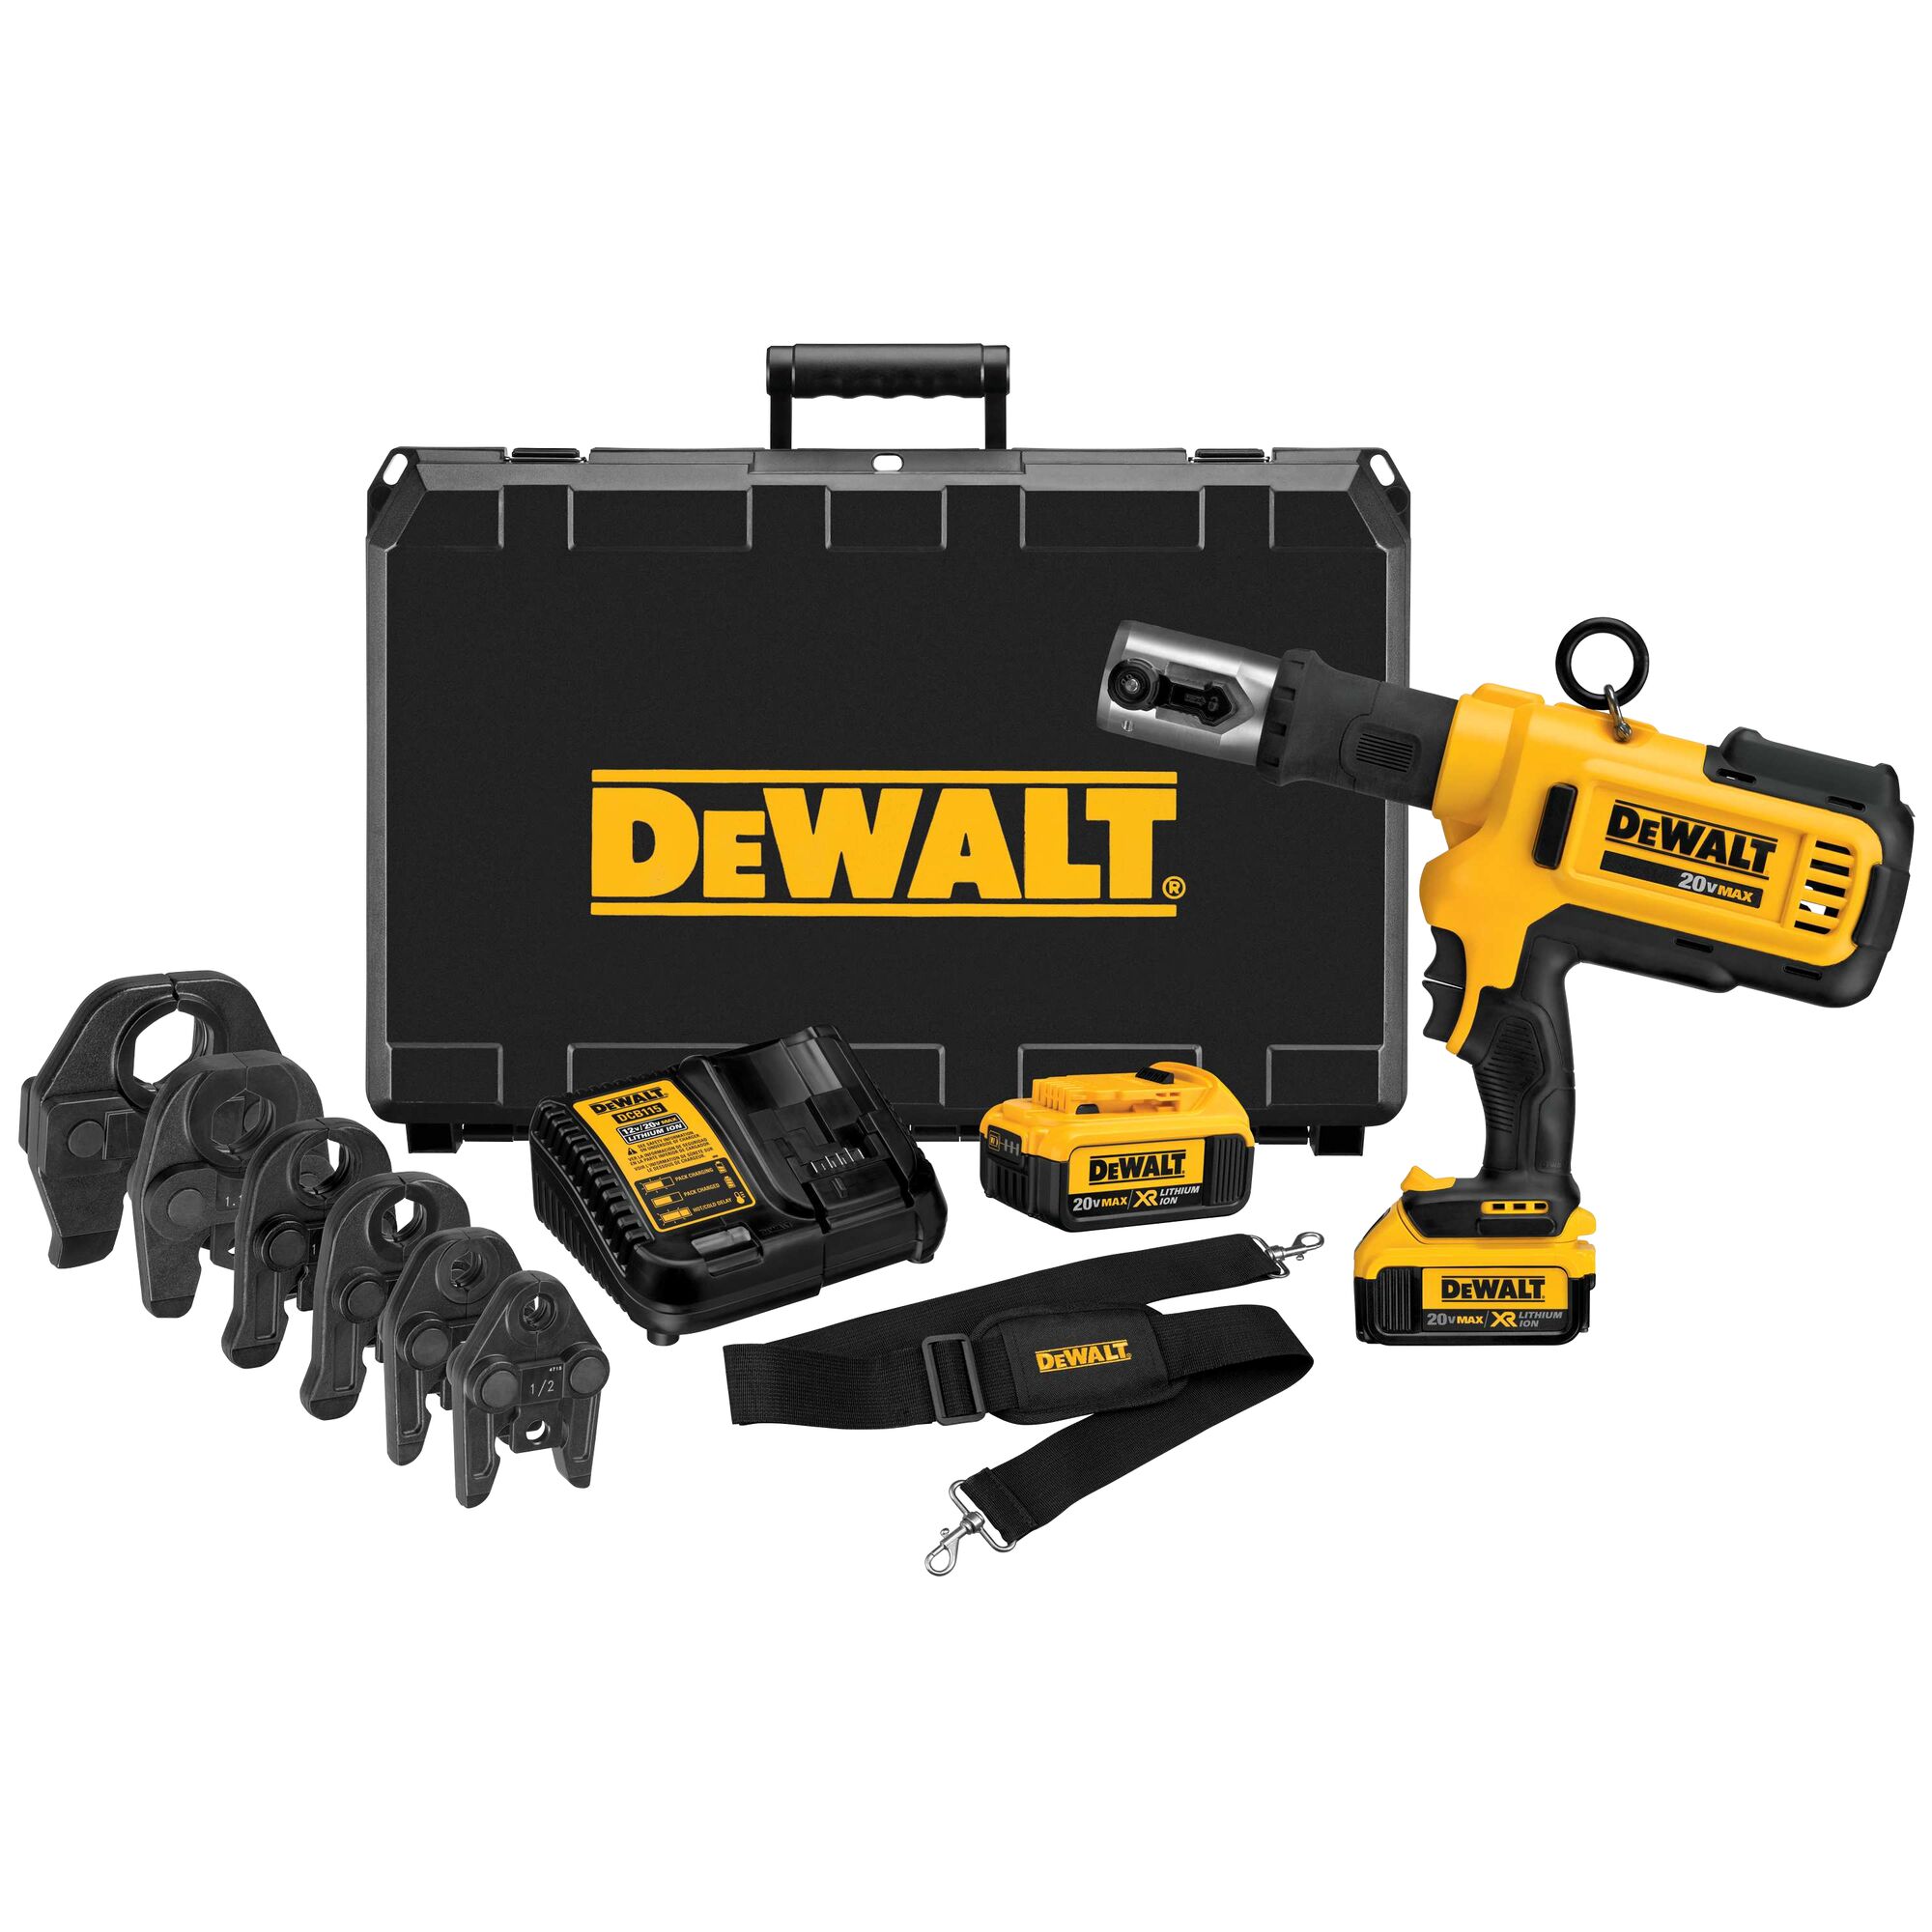 DEWALT DCD200D1 DW 20V MAX Cordless Drain Snake Kit NEW IN BOX 